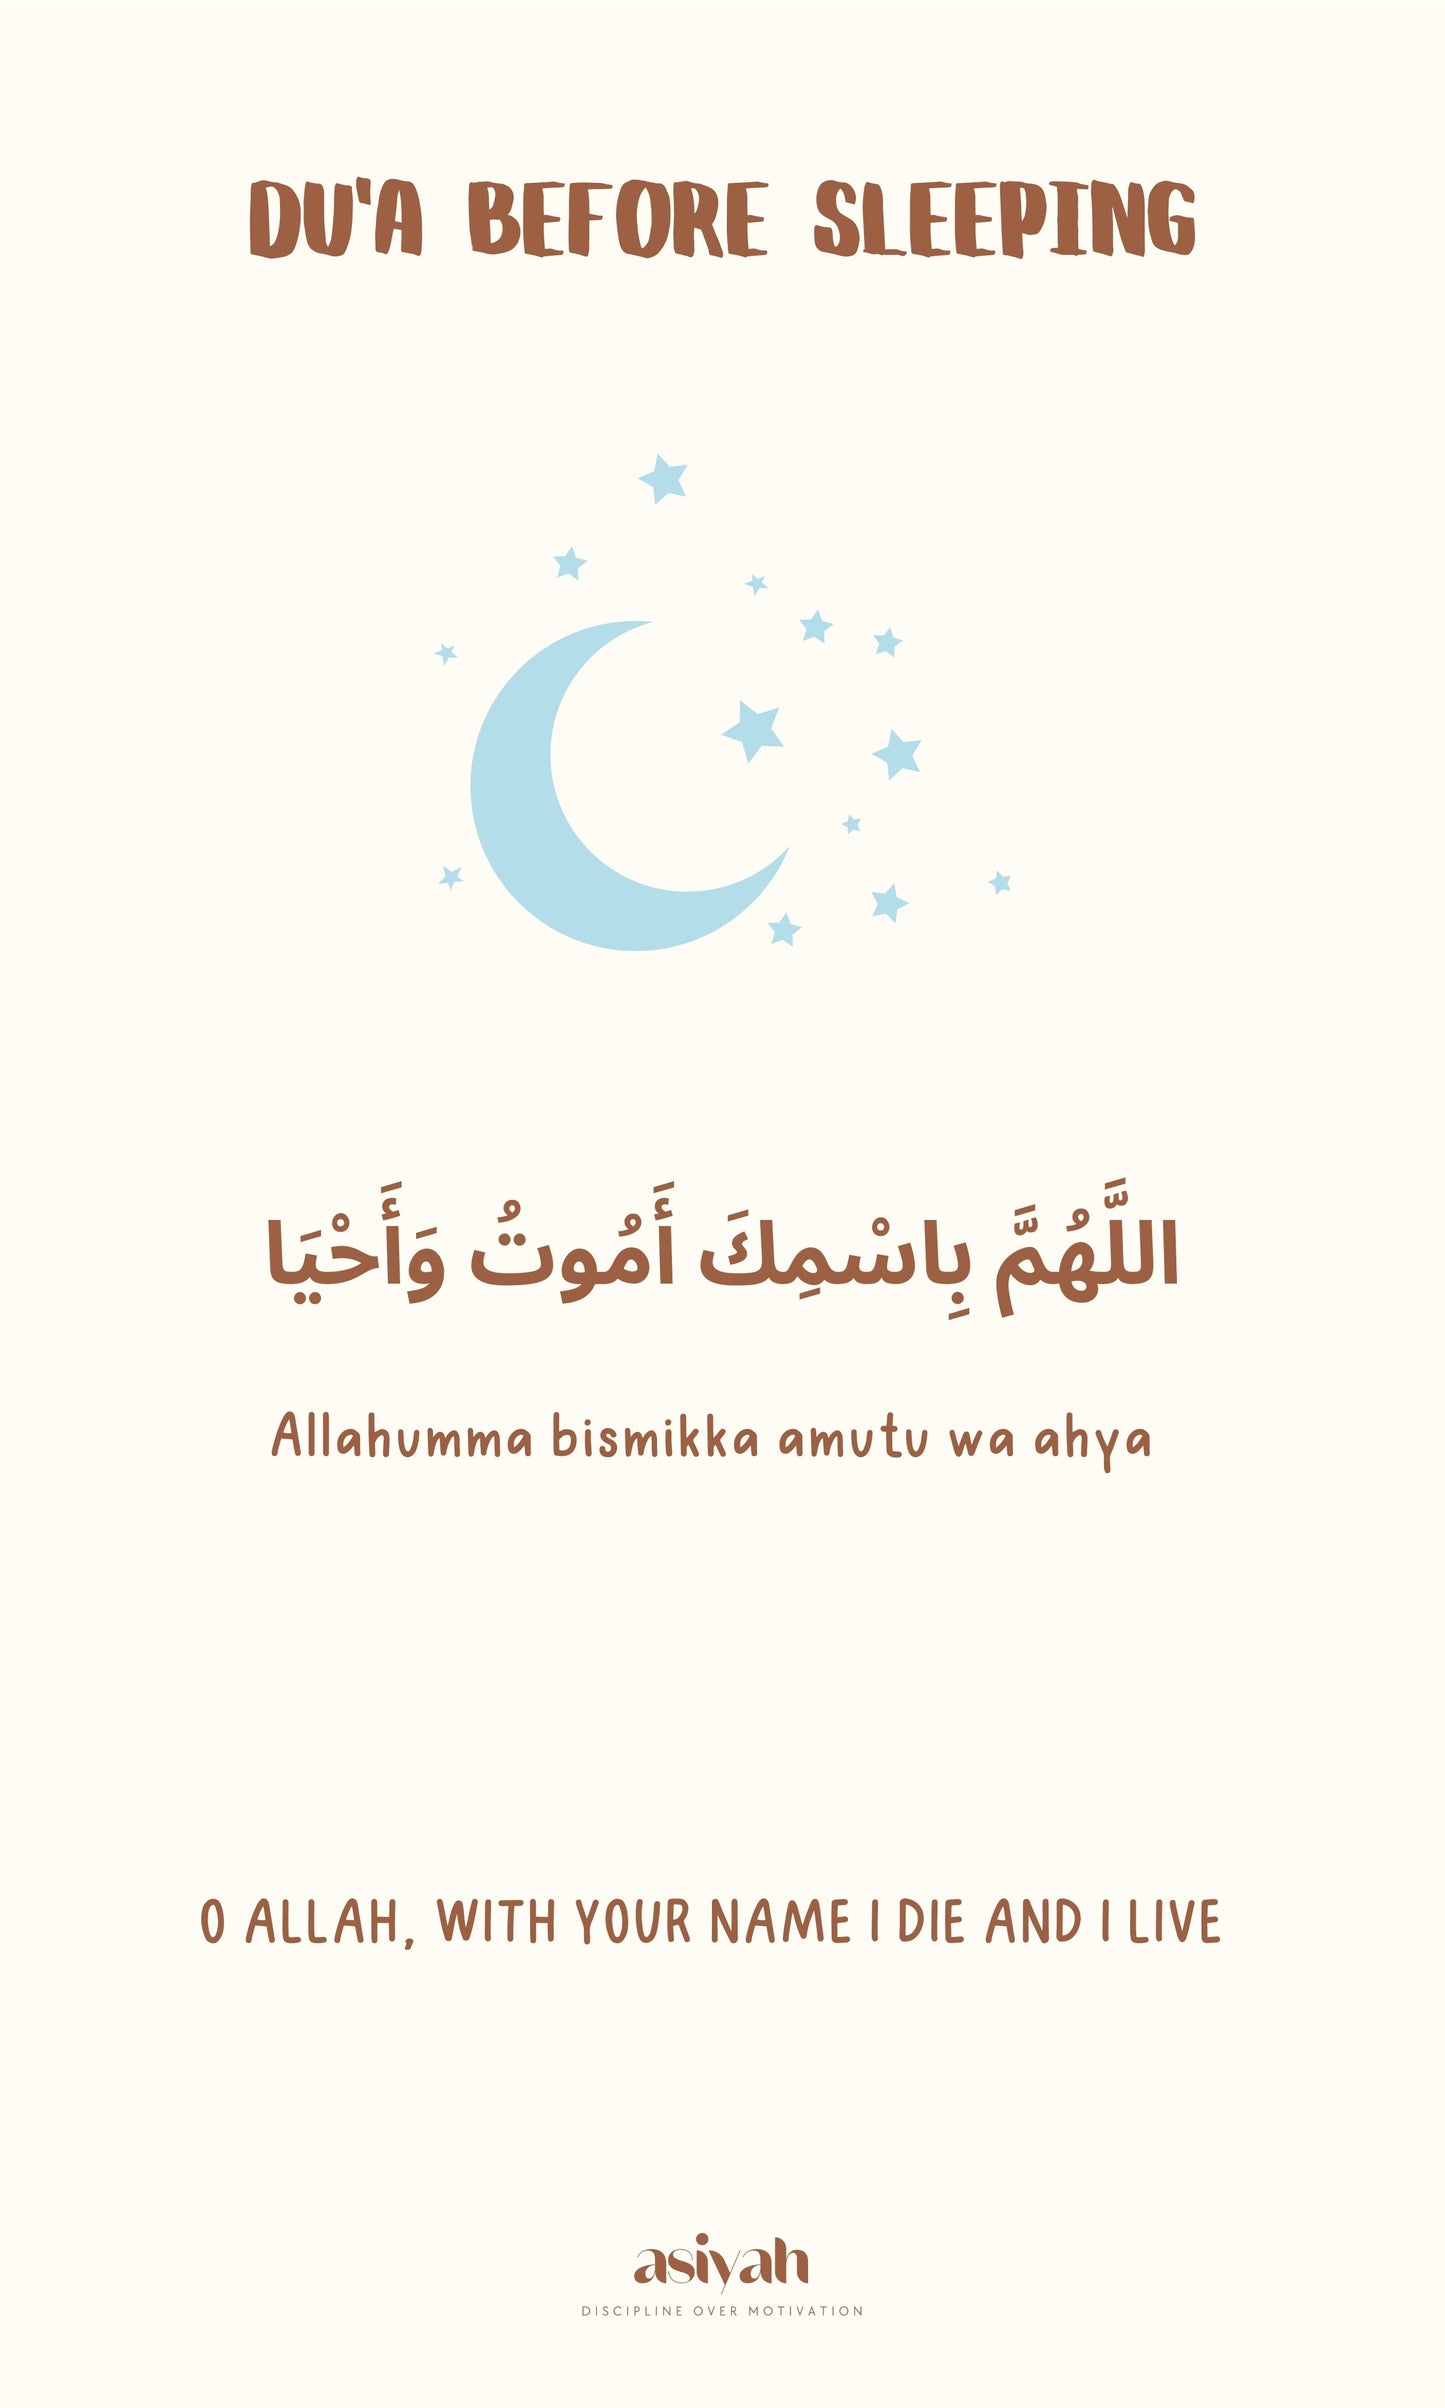 Asking Allah - Du'as for little believers